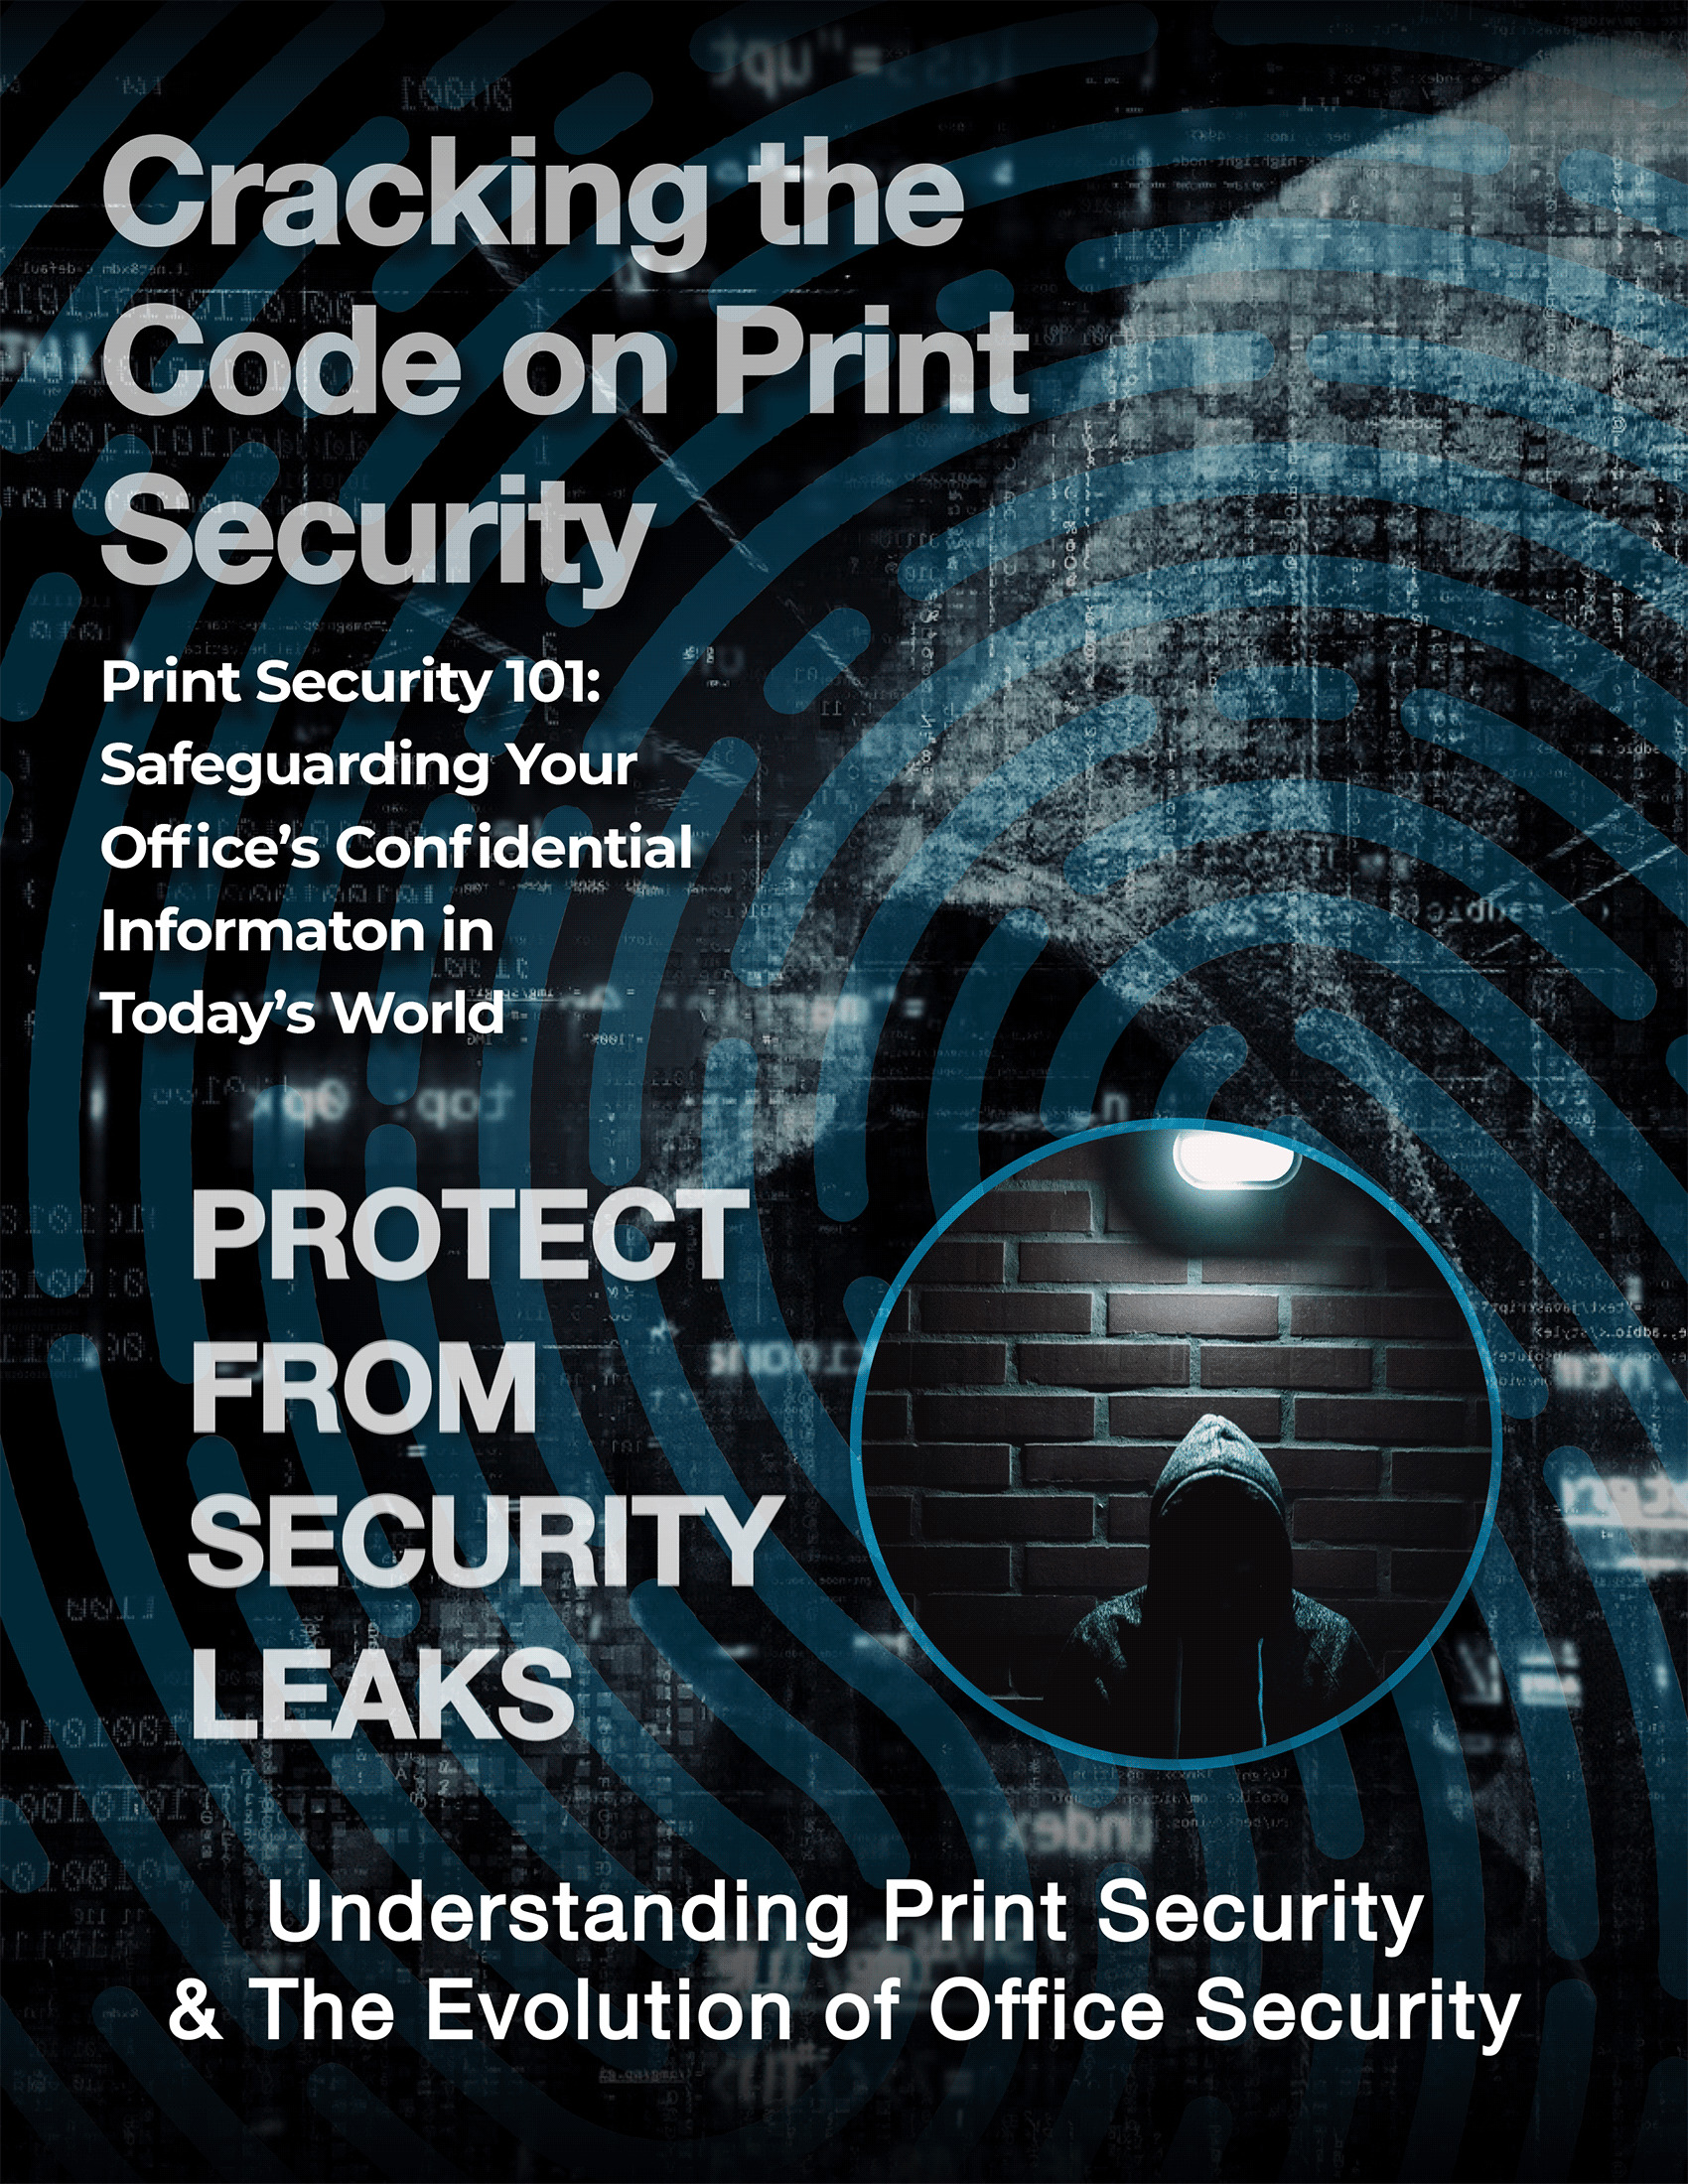 Print Security 101 Flipbook